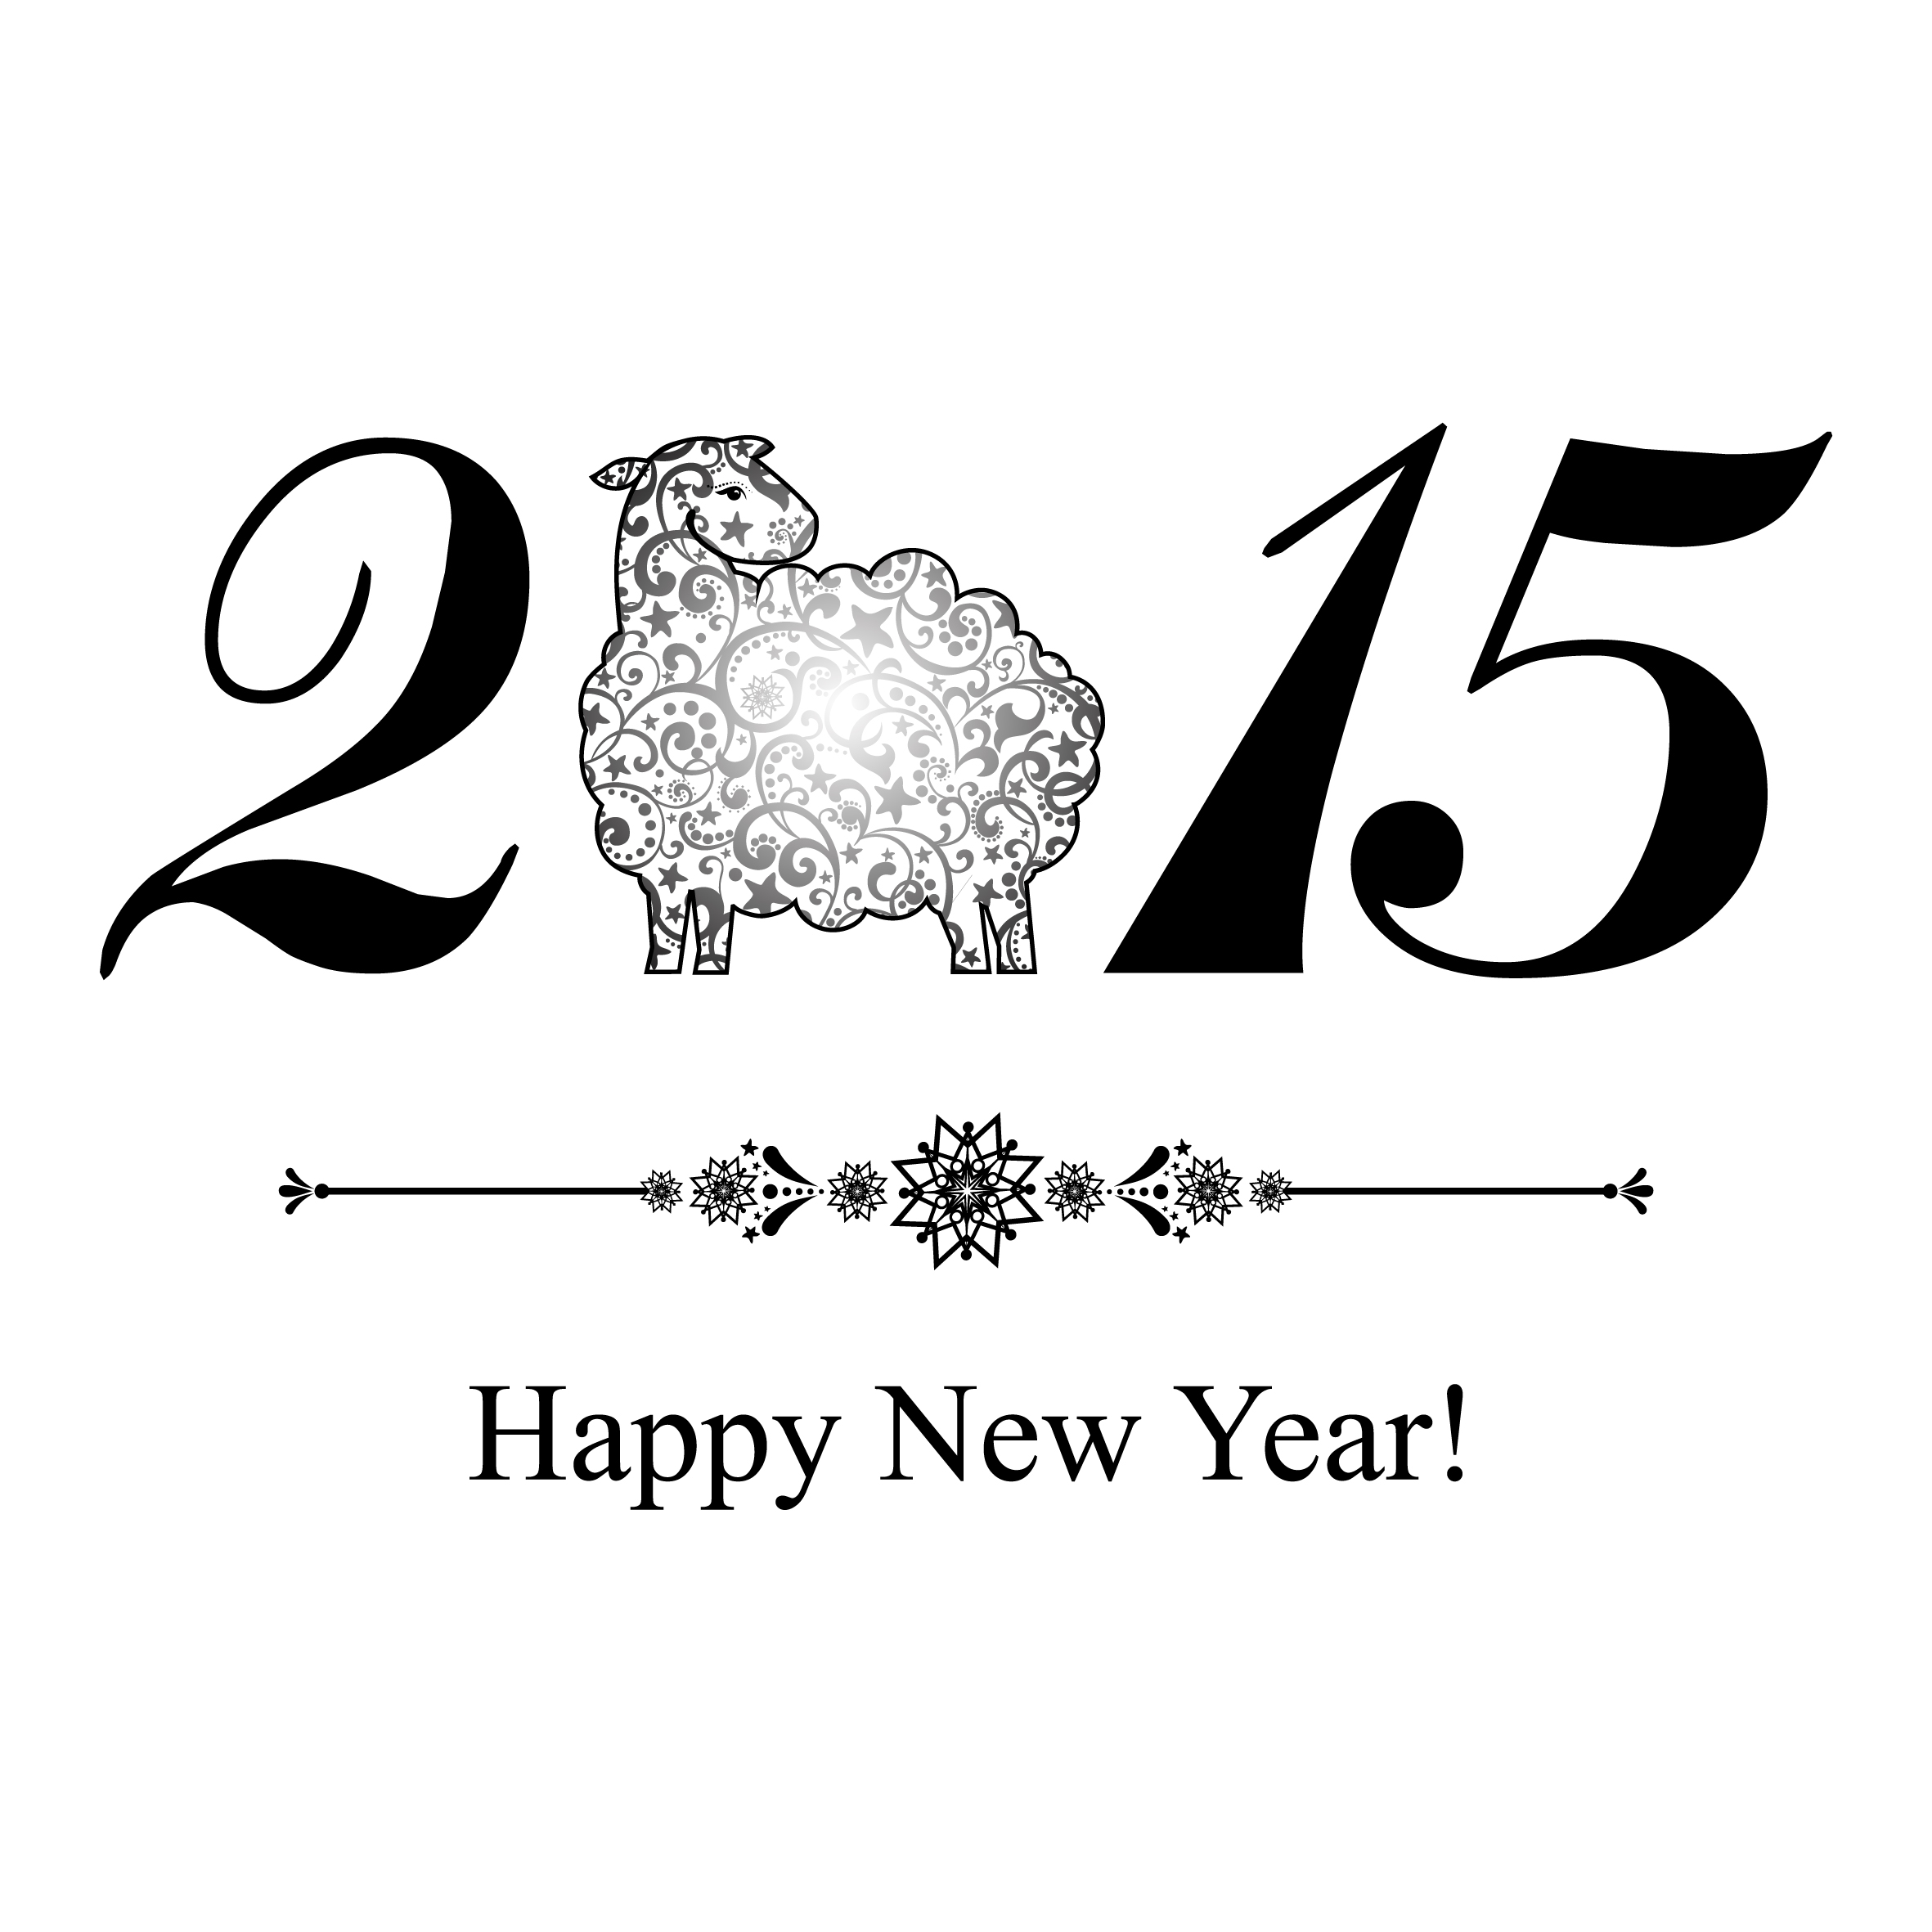 2015 sheep year background creative vector 04 year sheep creative background 2015   